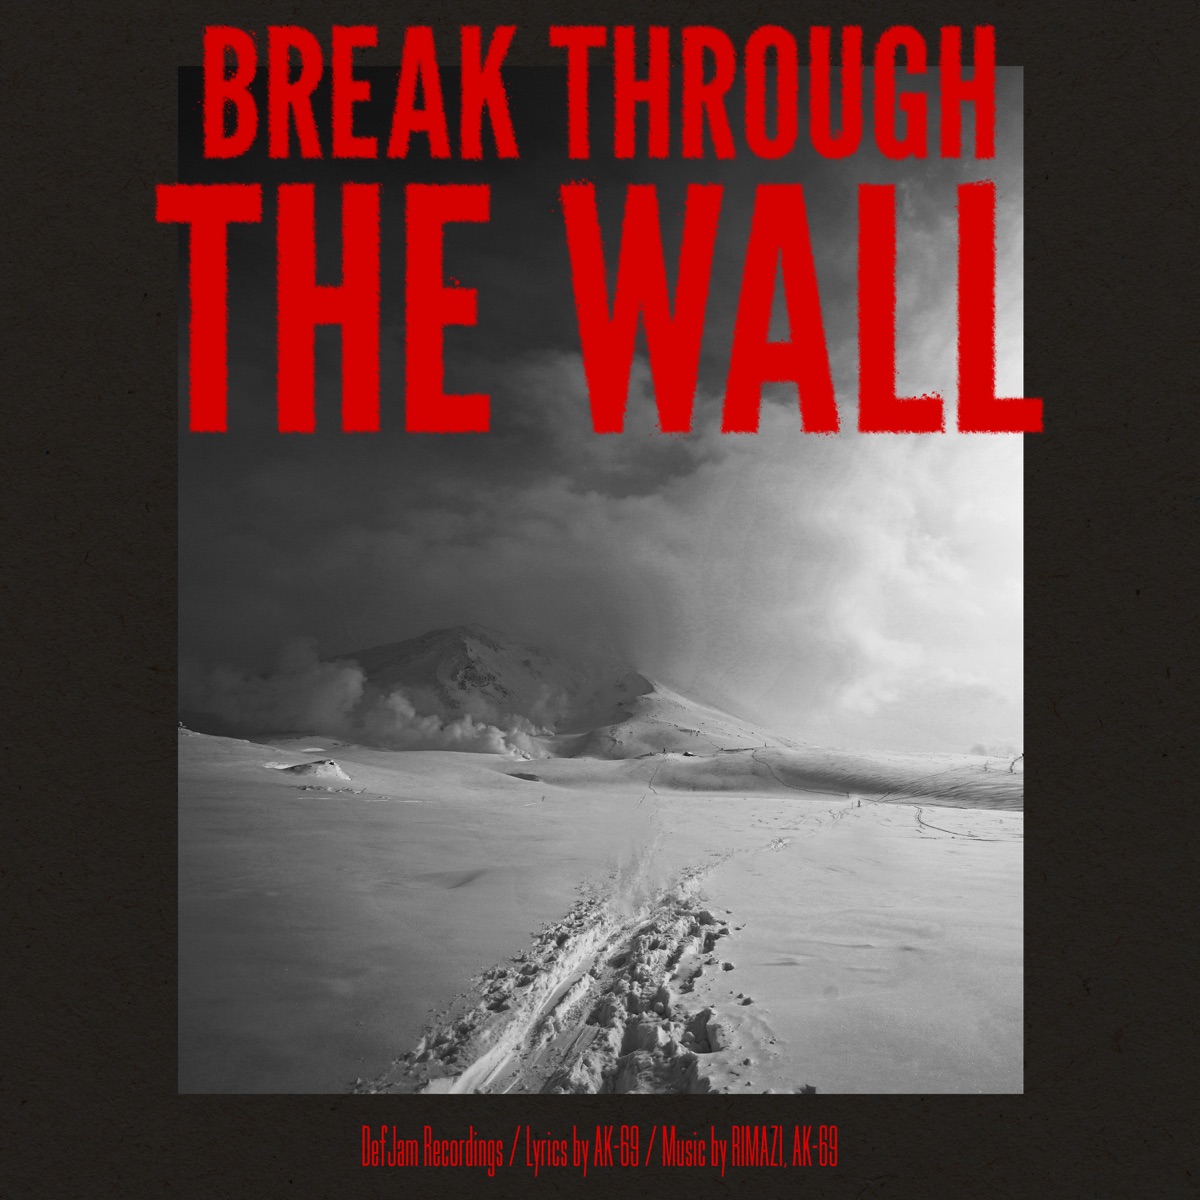 『AK-69 - Break through the wall 歌詞』収録の『Break through the wall』ジャケット